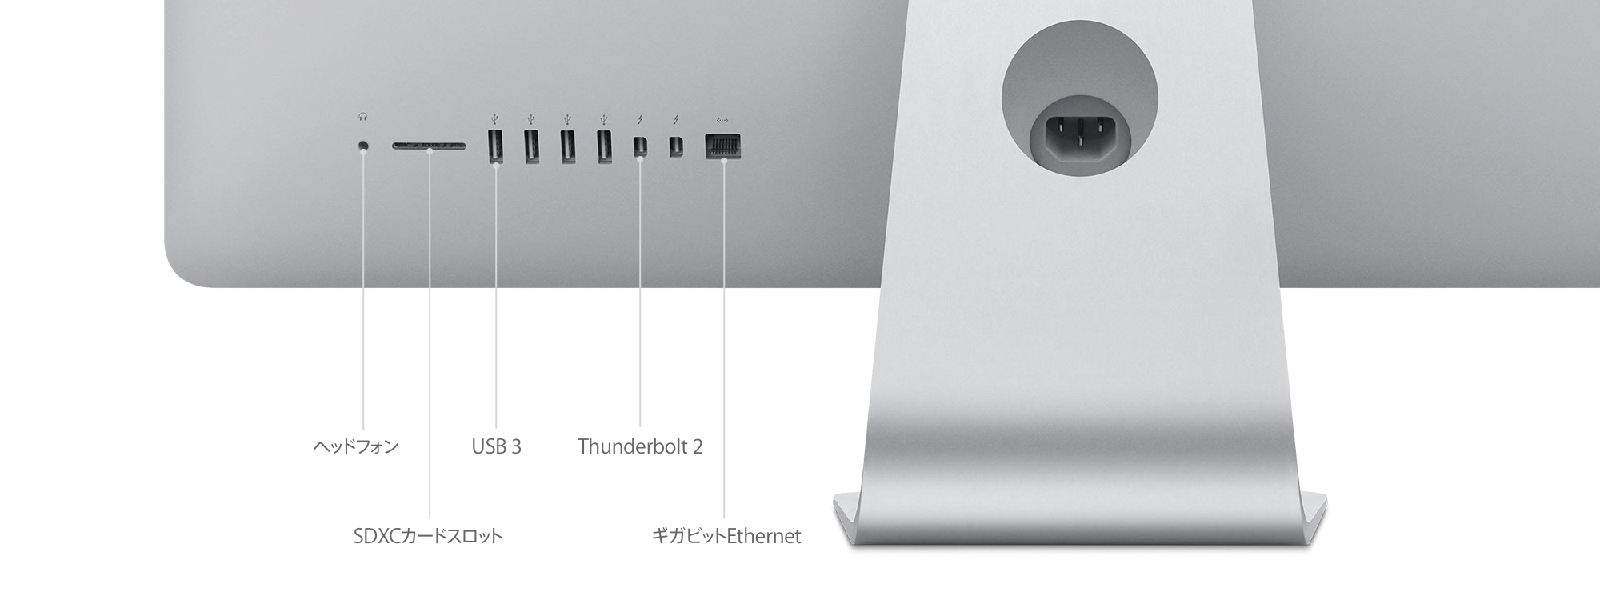 iMac (Retina 5K, 27-inch, Late 2015) - 技術仕様 (日本)